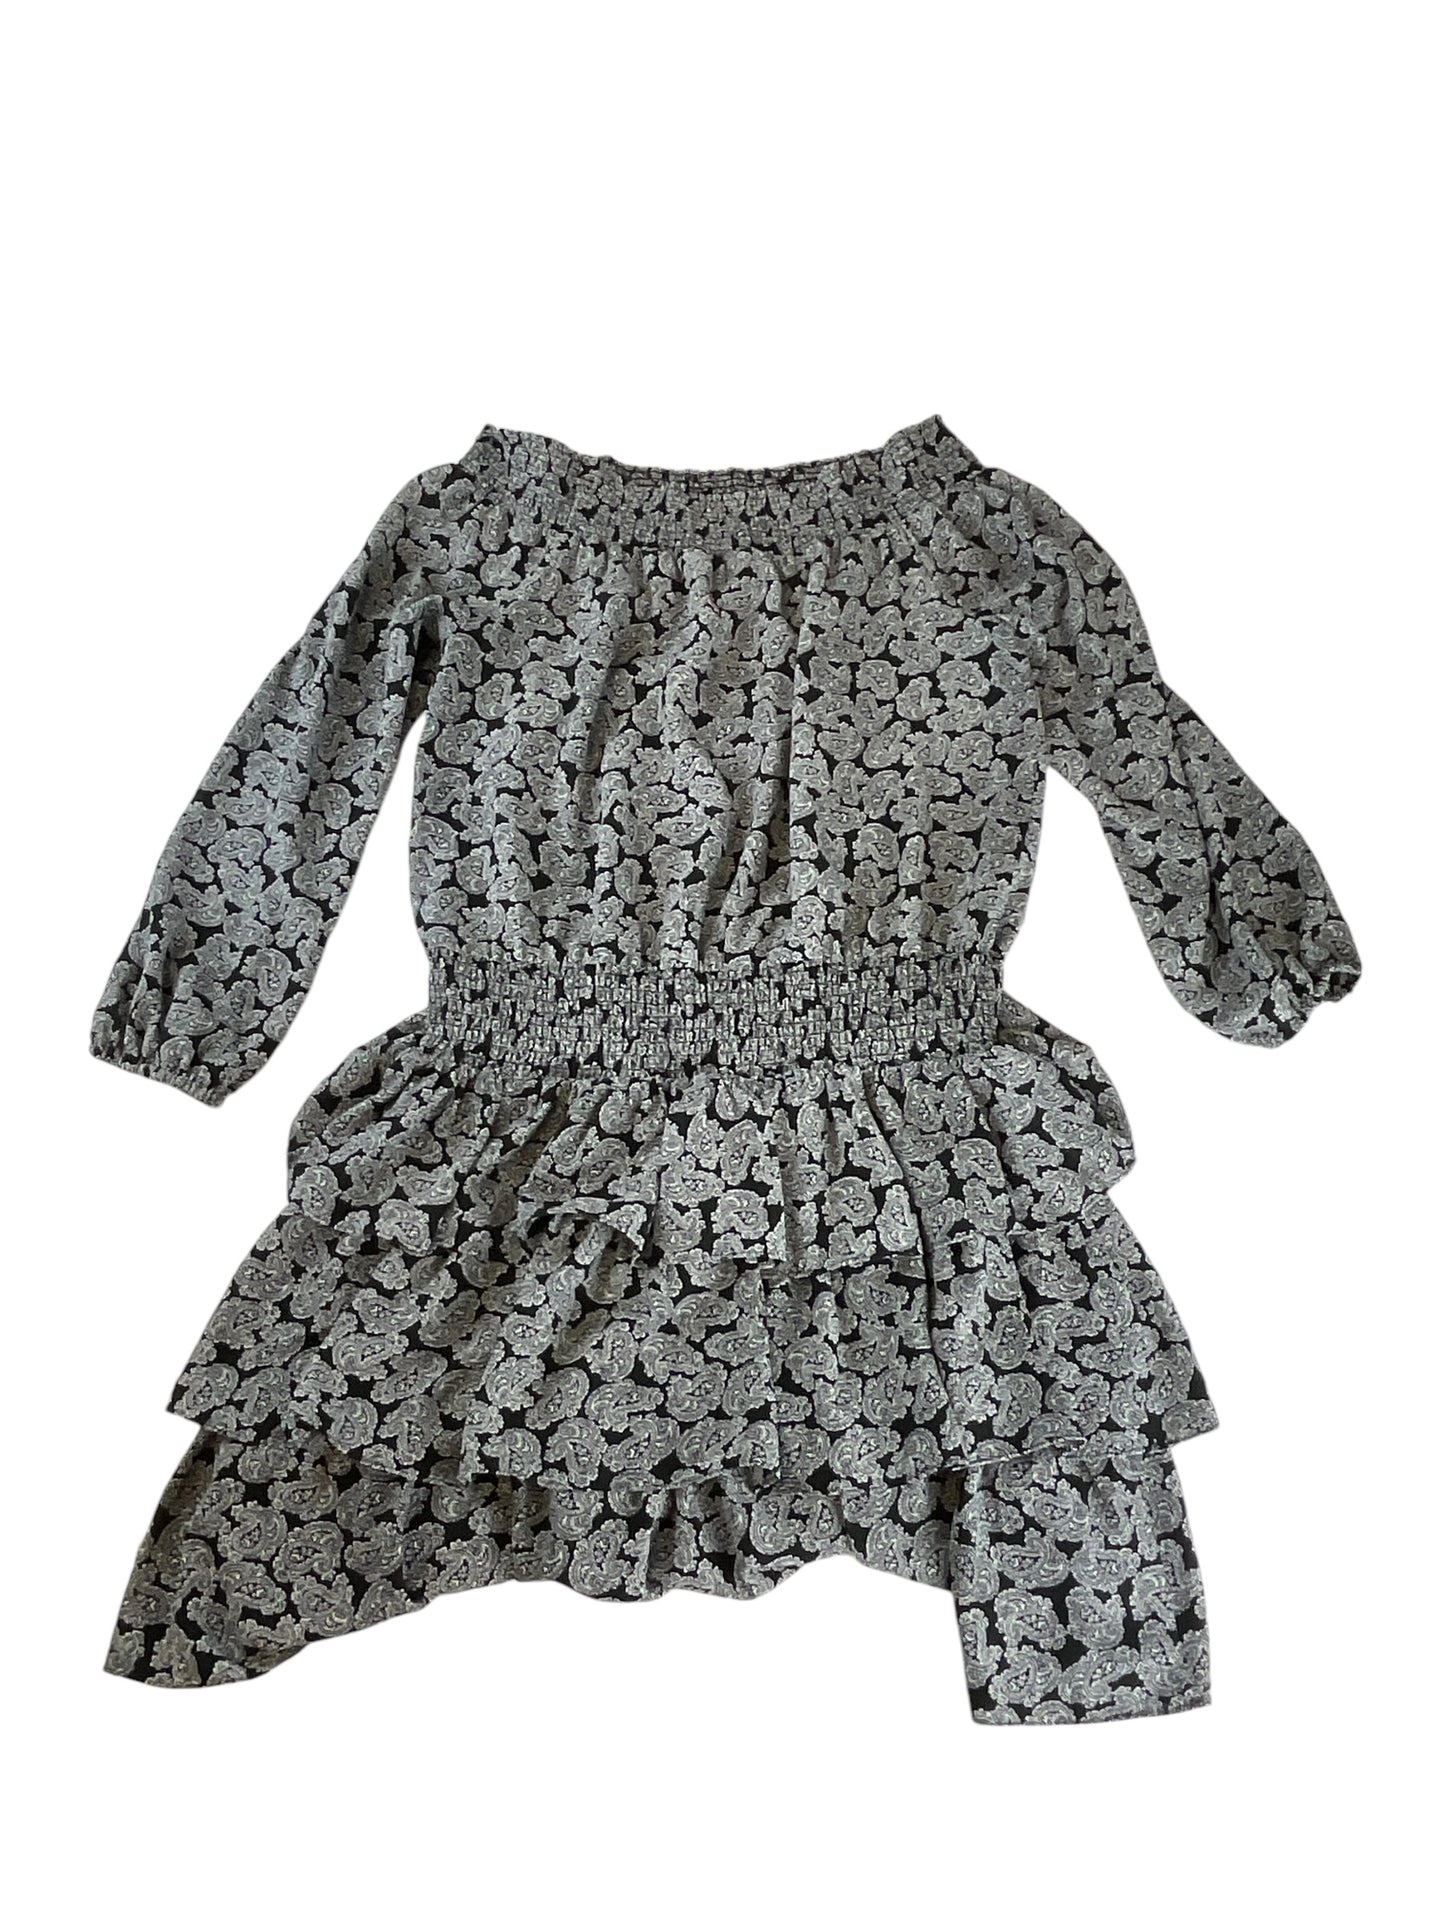 Dress Designer By Michael By Michael Kors  Size: L